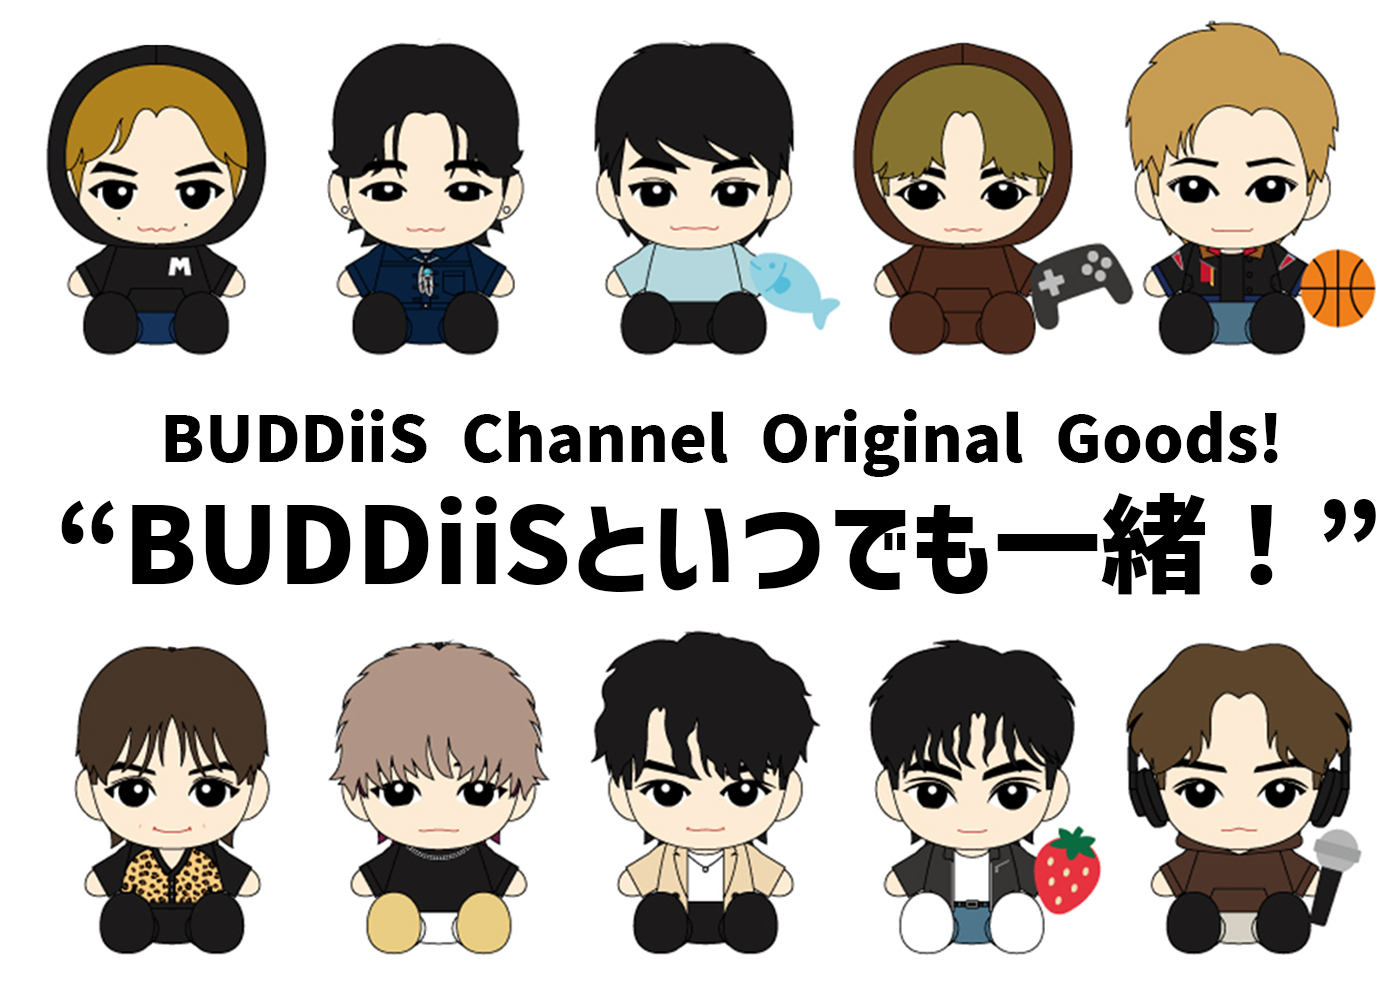 BUDDiiS公式YouTubeチャンネル”BUDDiiS Channel”オリジナルグッズ発売 ...